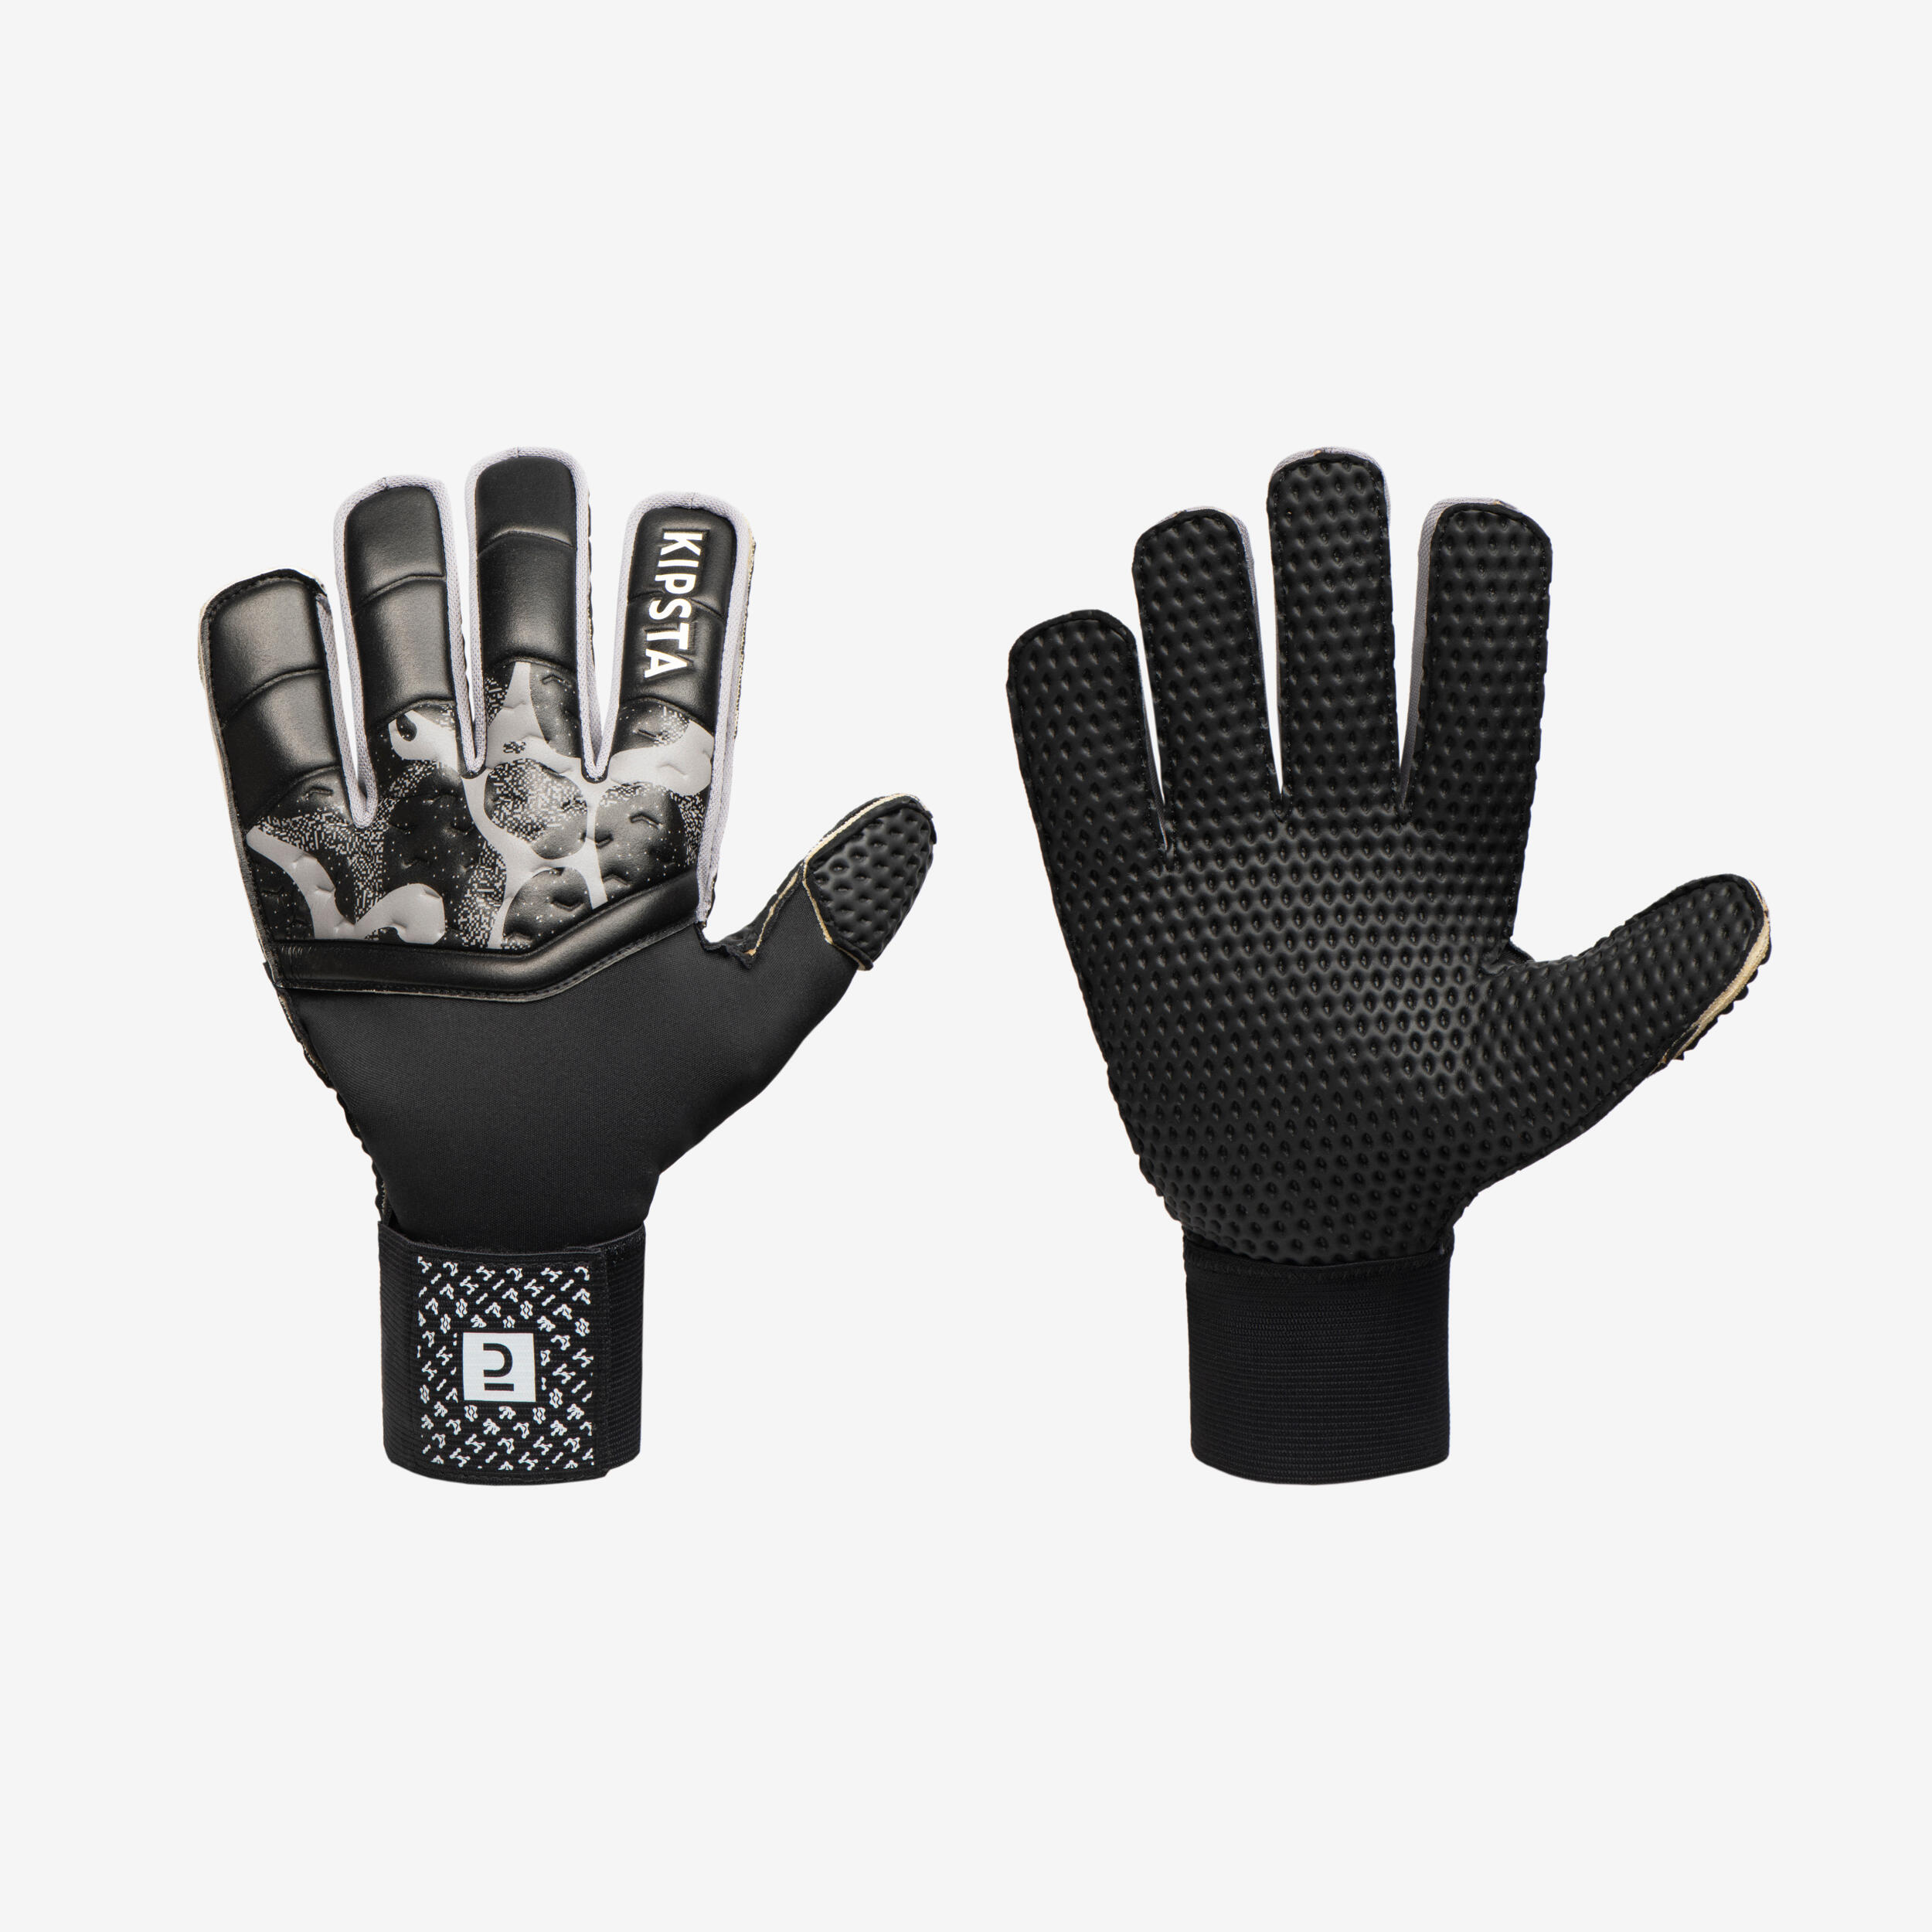 KIPSTA Adult Football Goalkeeper Gloves F100 Superresist - Black/Grey